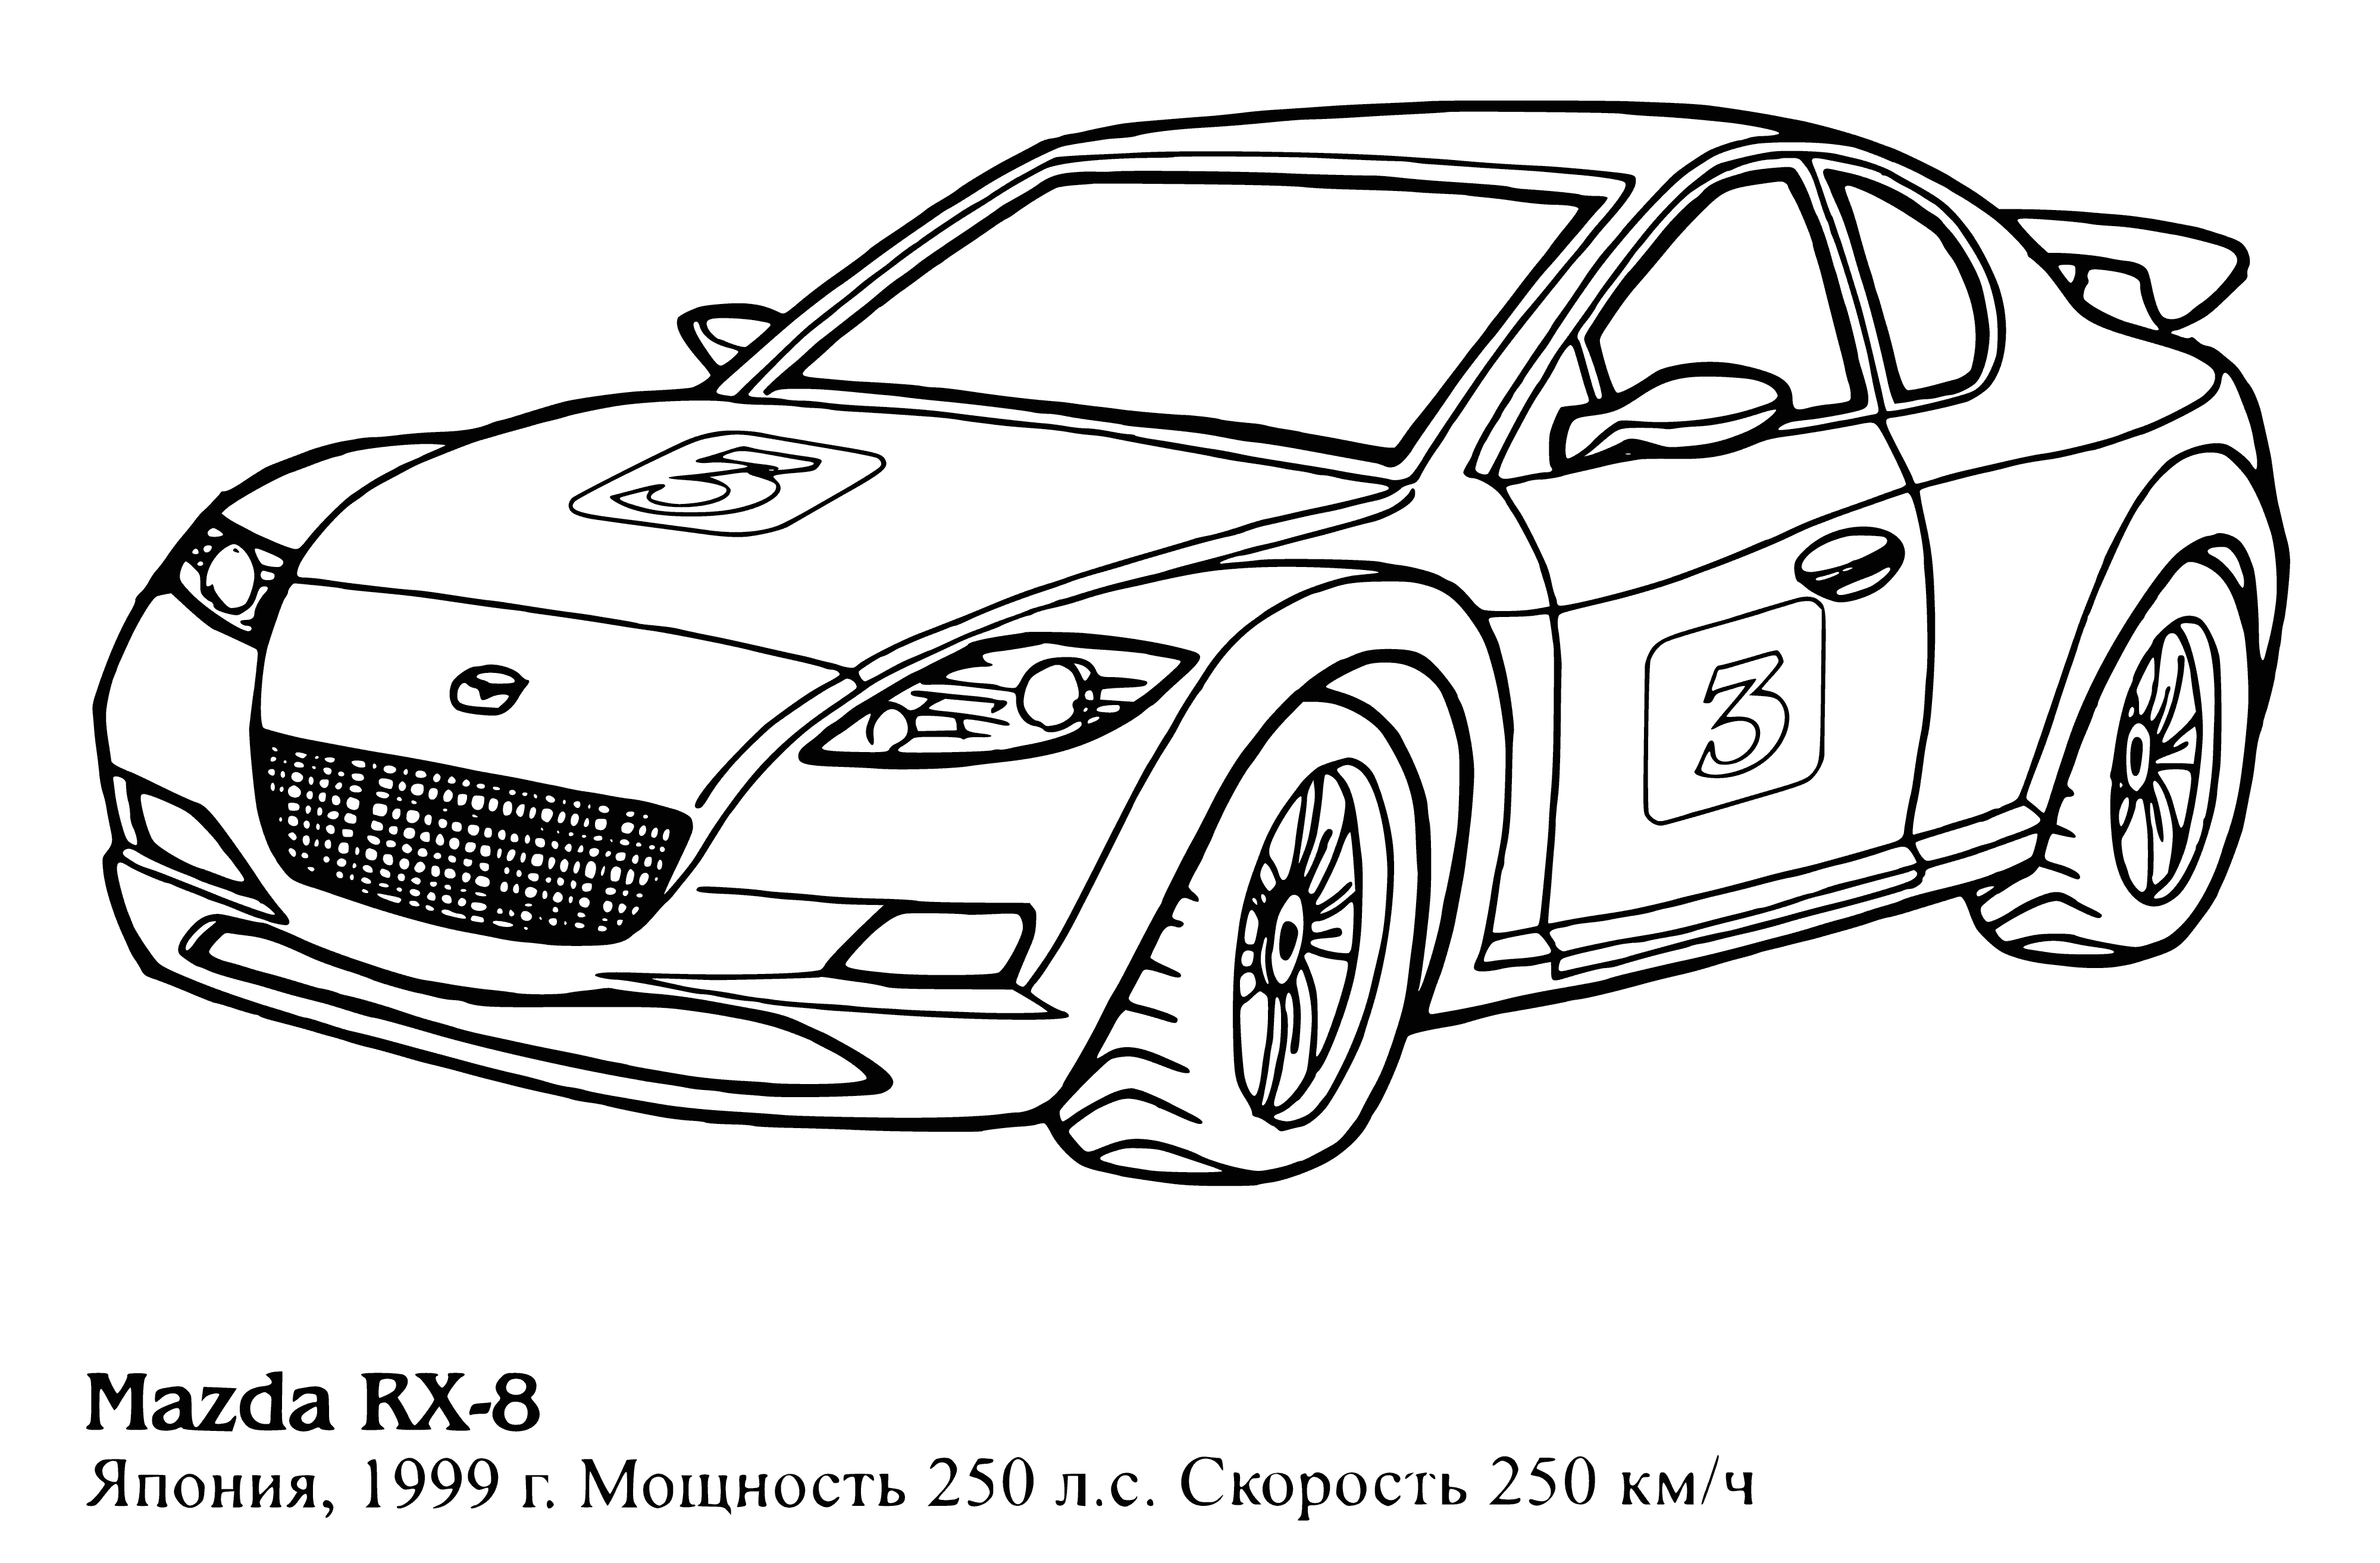 Mazda RX-8 coloring page